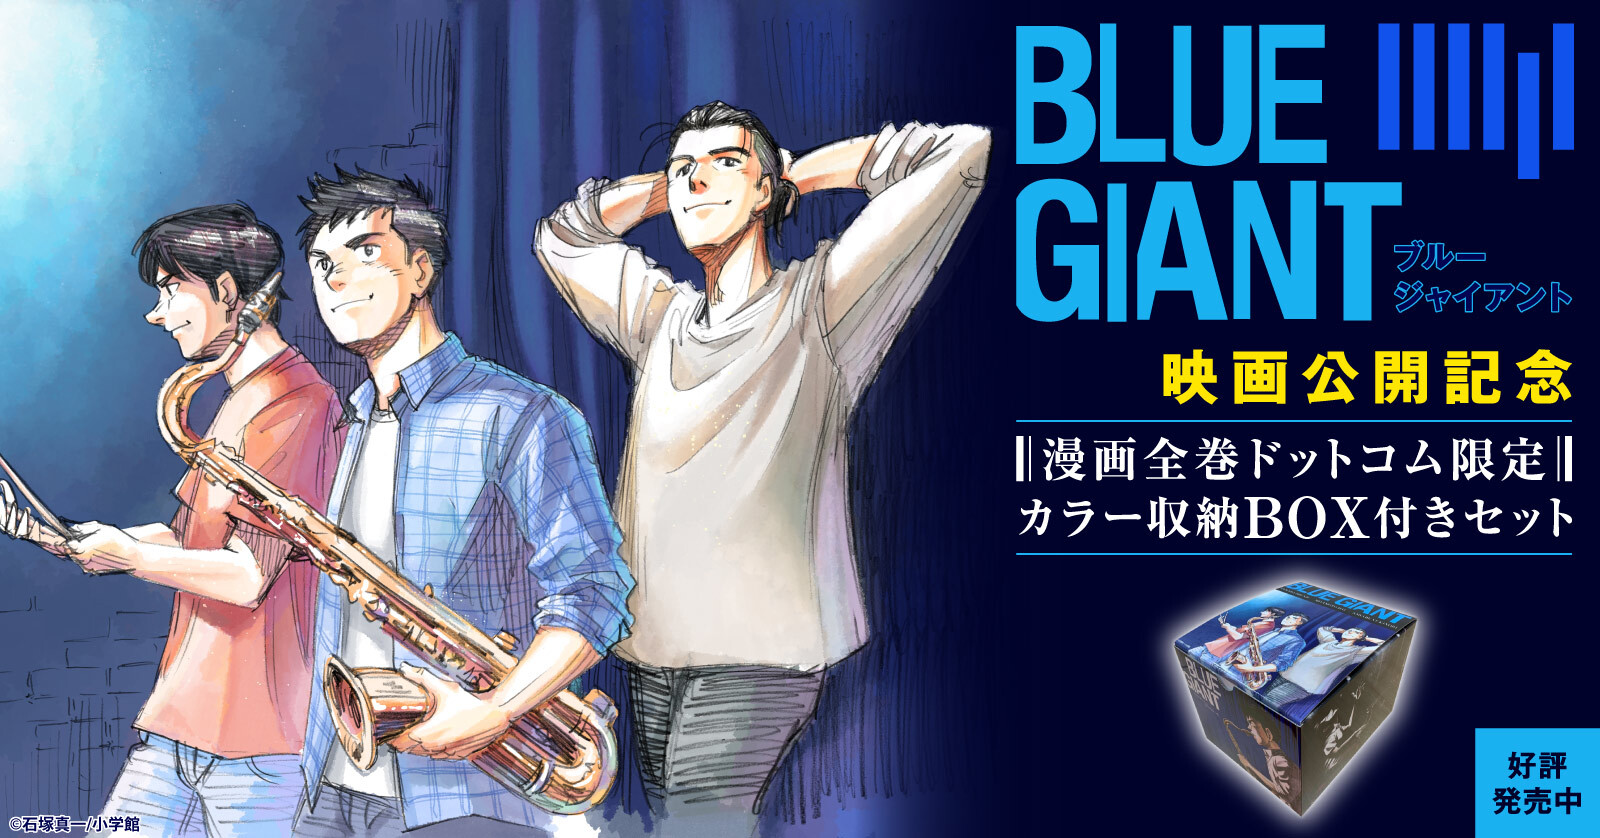 『BLUE GIANT』収納BOX付きセット